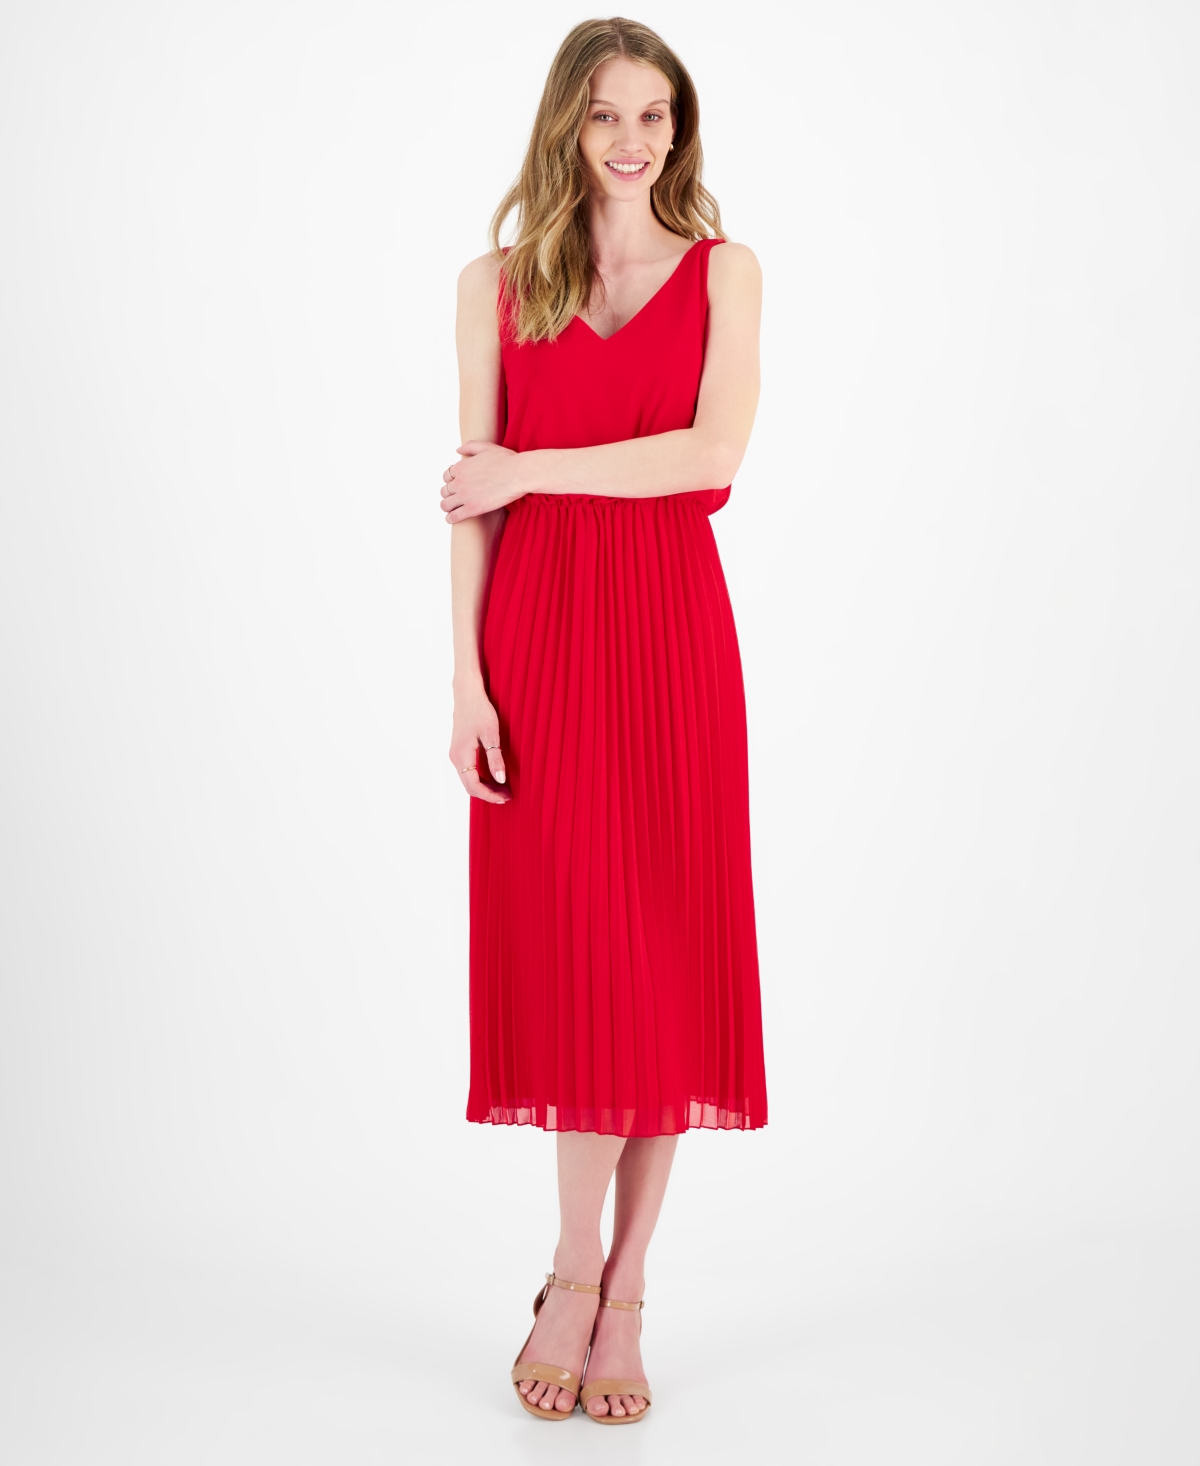 Women's Scoop-Neck Sleeveless Plisse Dress - Coral